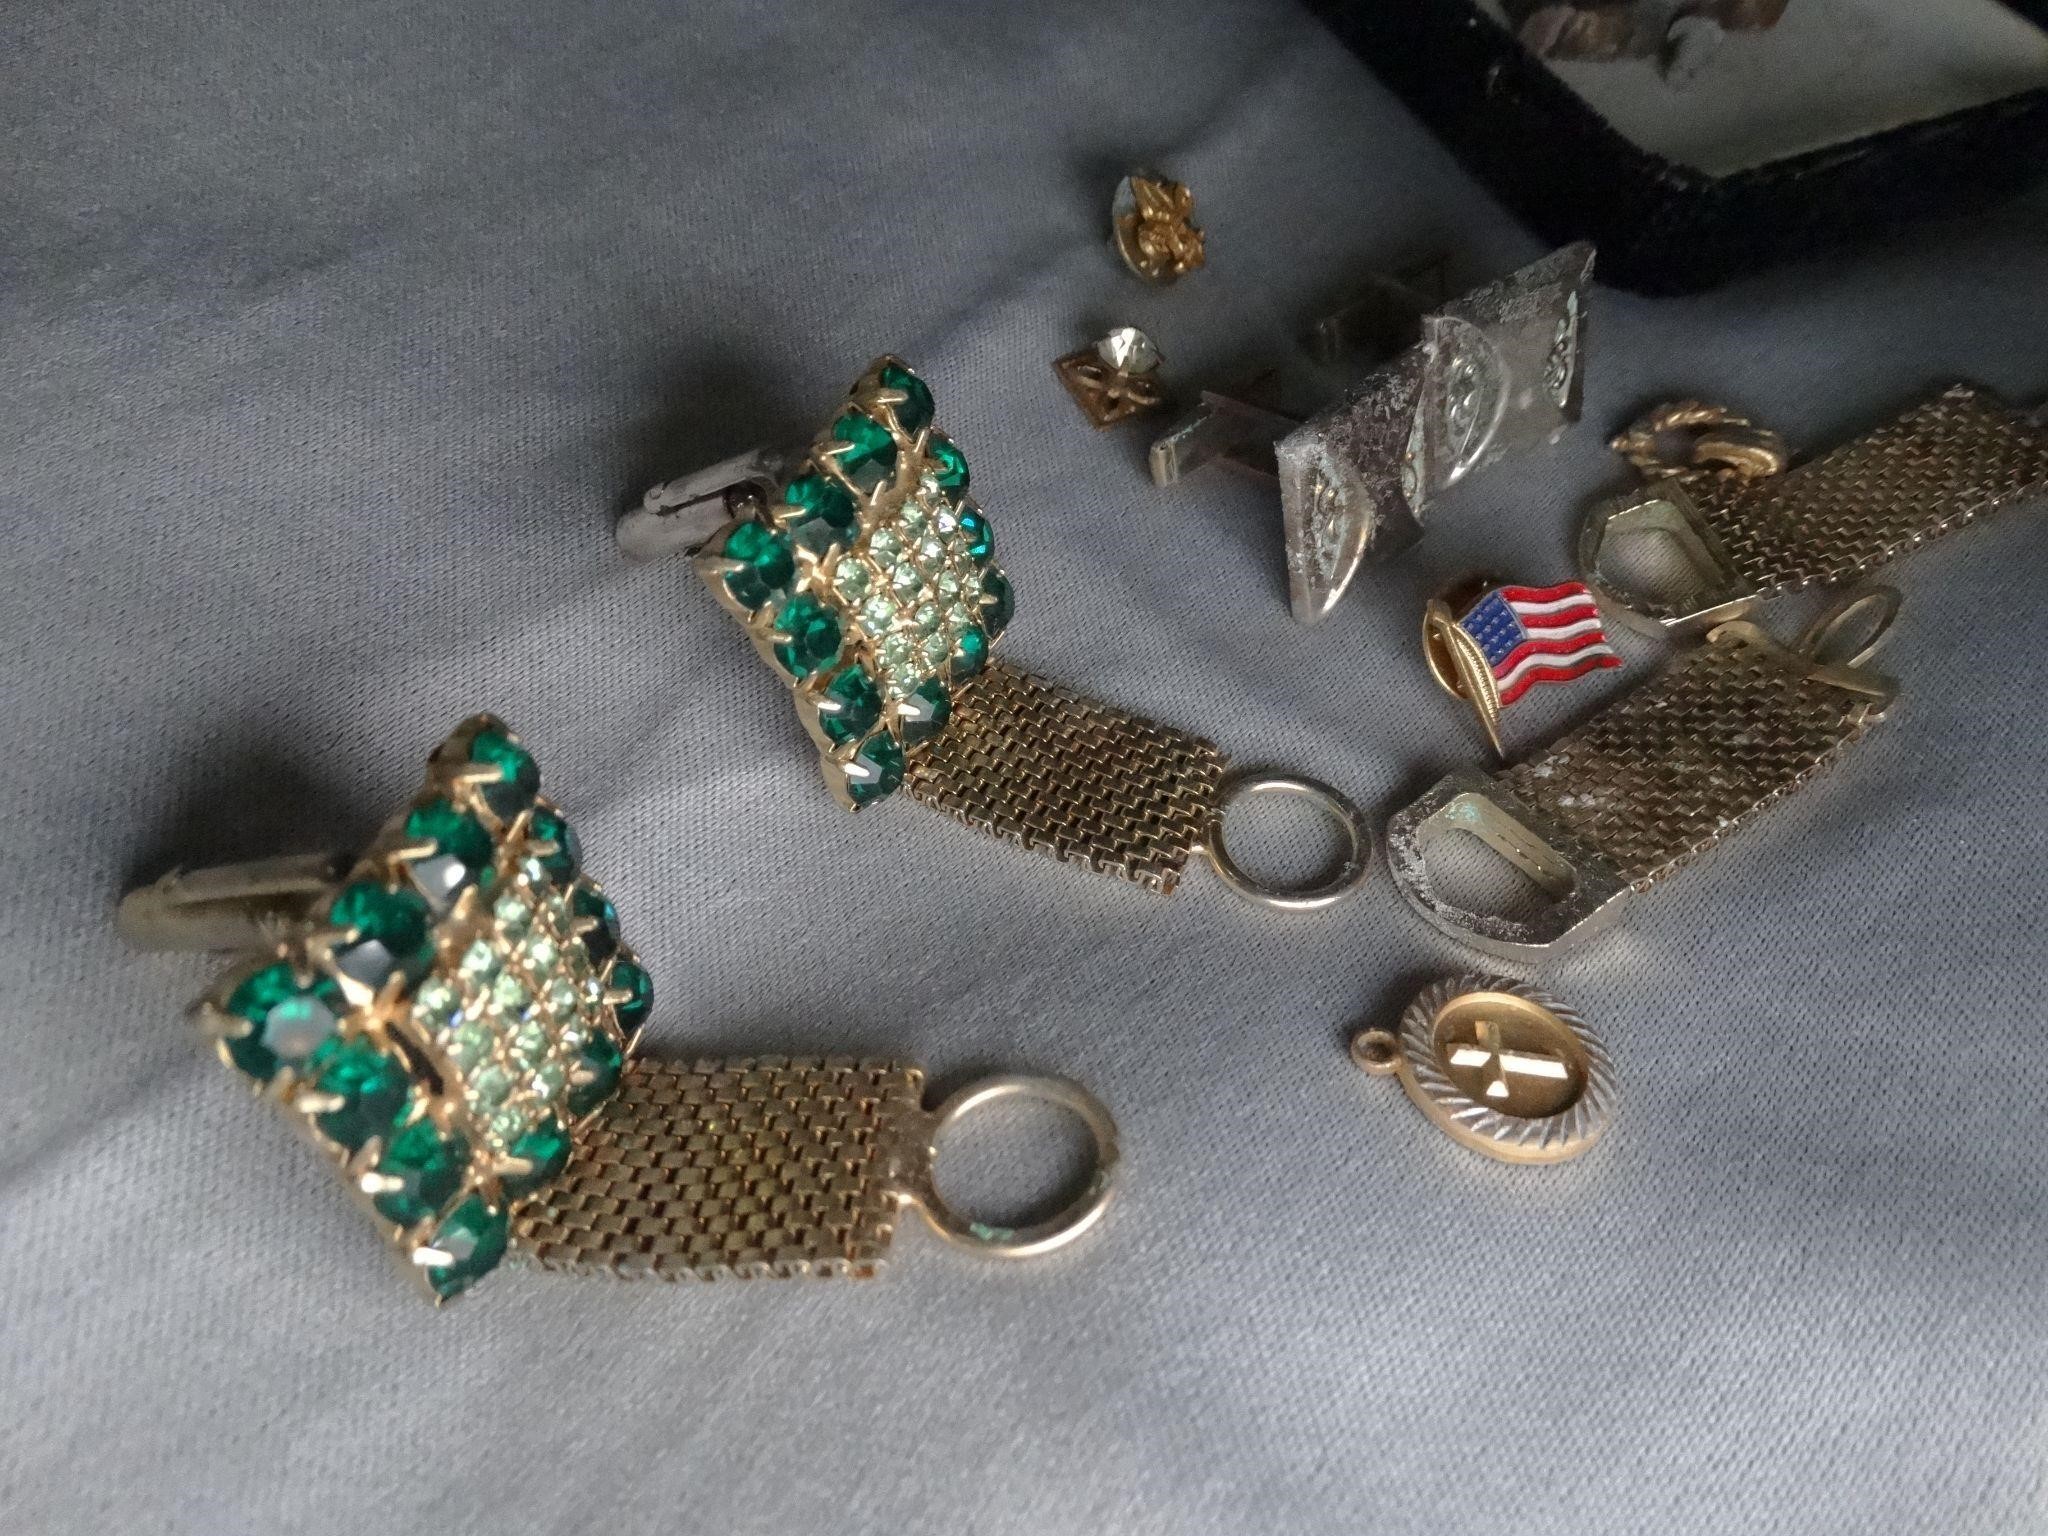 MIsc Vintage Jewelry - Cufflinks - Pins